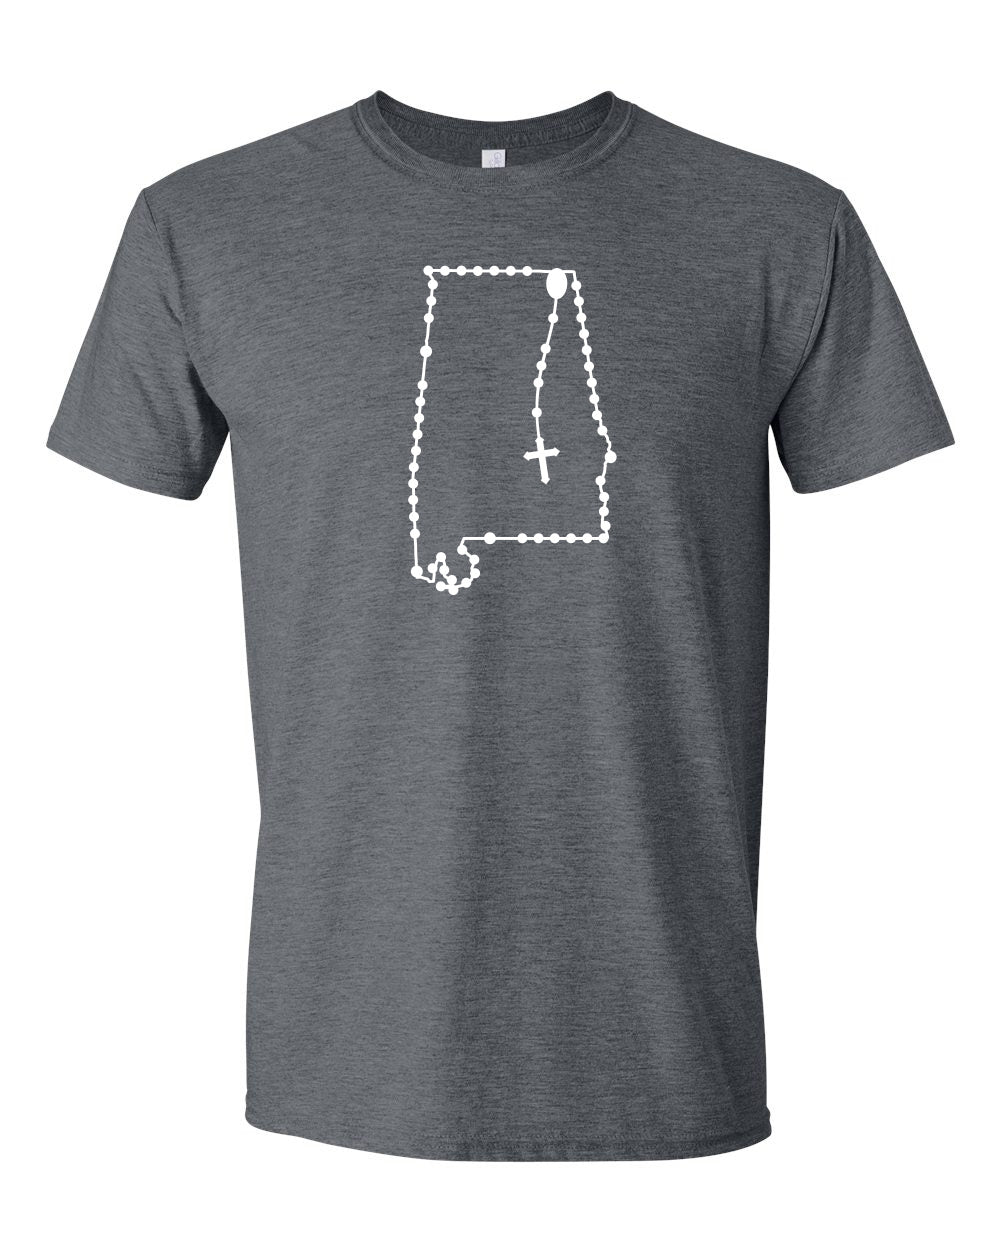 Alabama State Catholic Rosary Custom T-shirt Gift, State Pride, graphic tees, oversized - shirt- front heathered dark gray